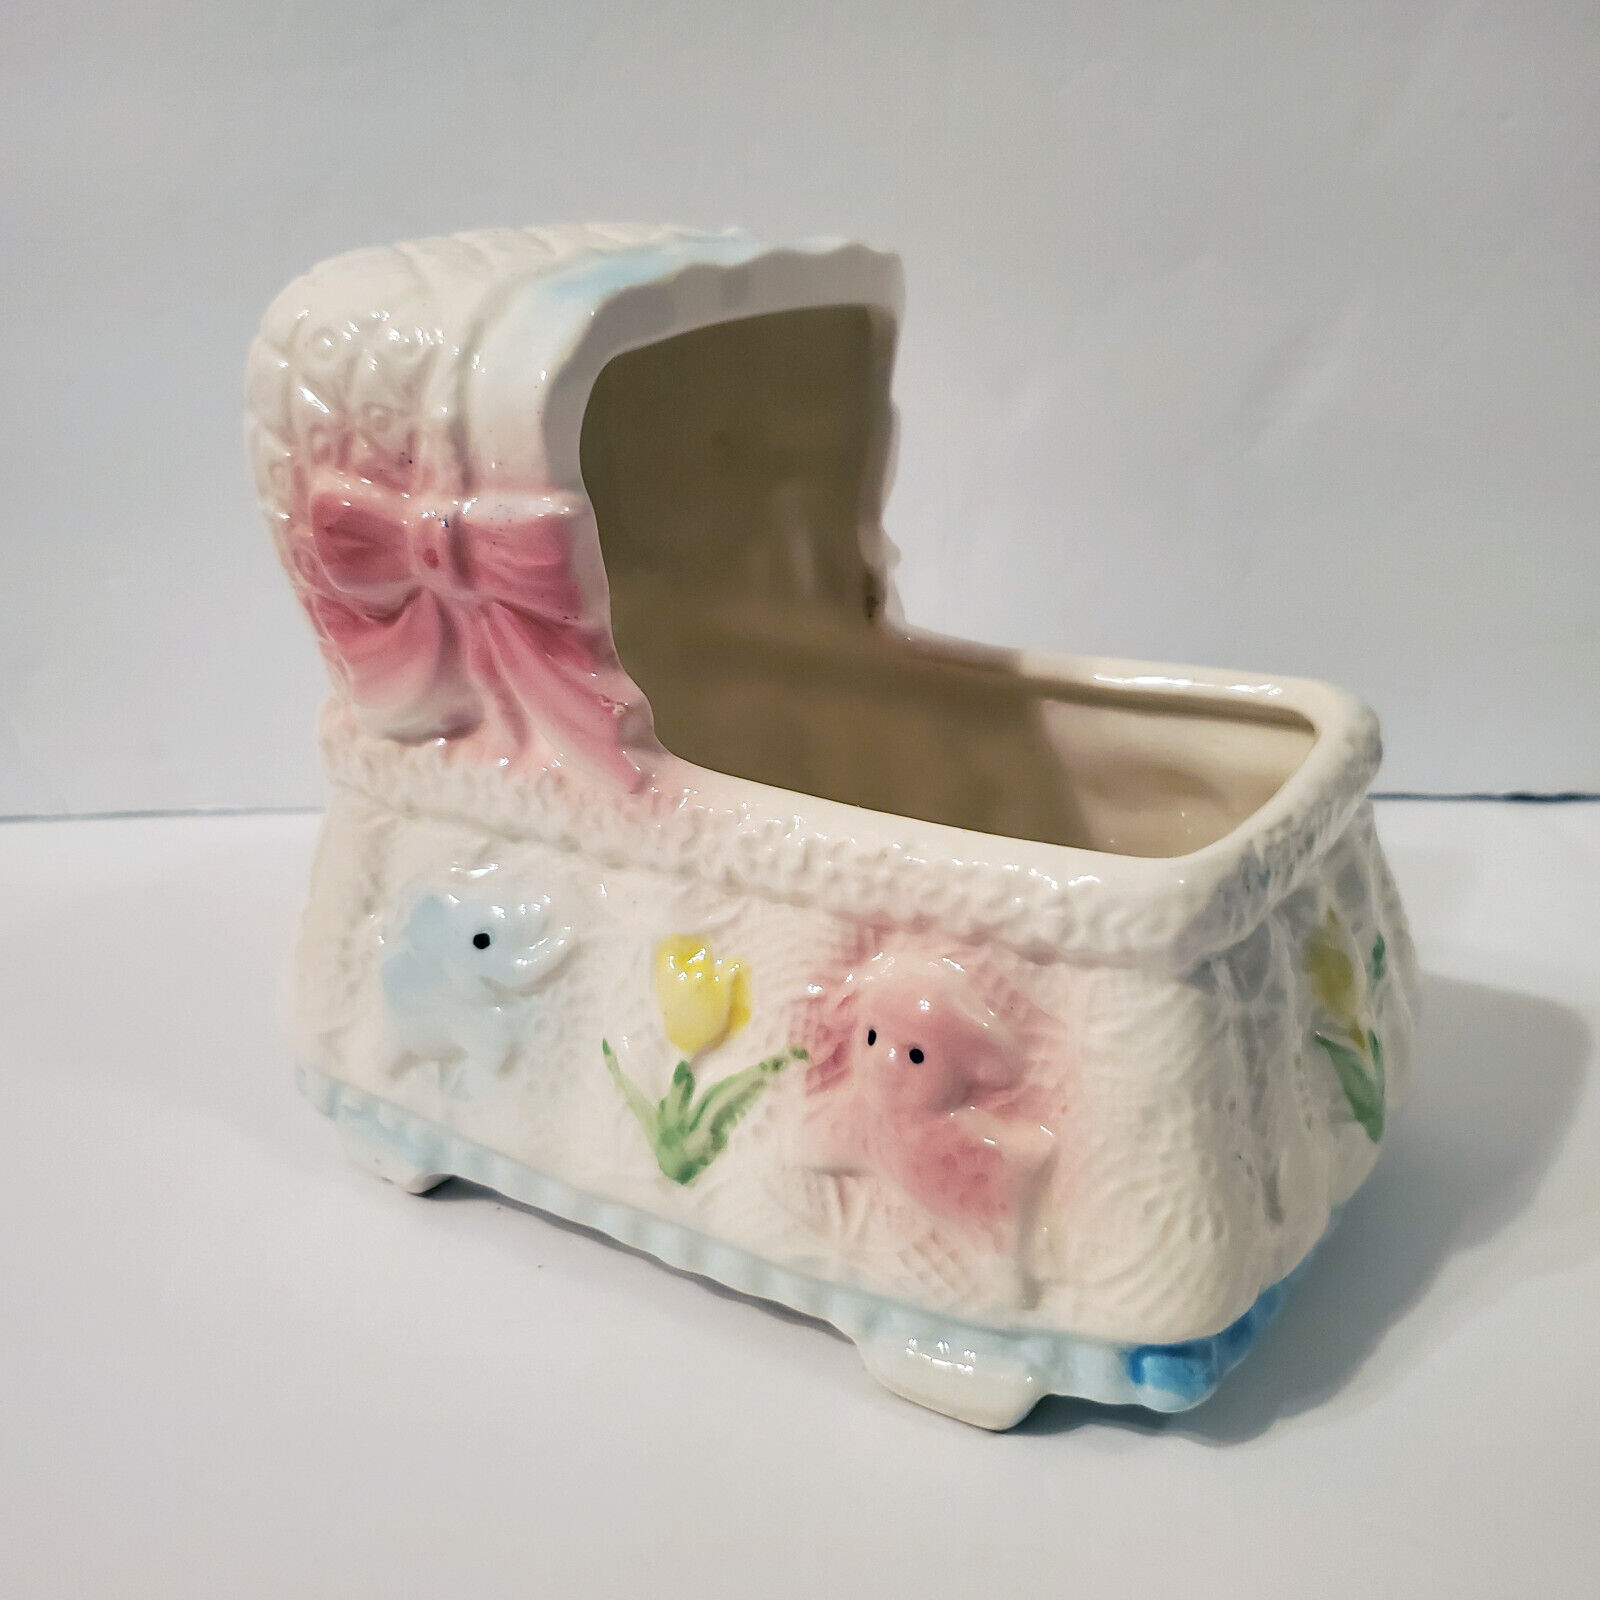 Vintage Relpo Ceramic Baby Nursery Decor Planter - Signed T805